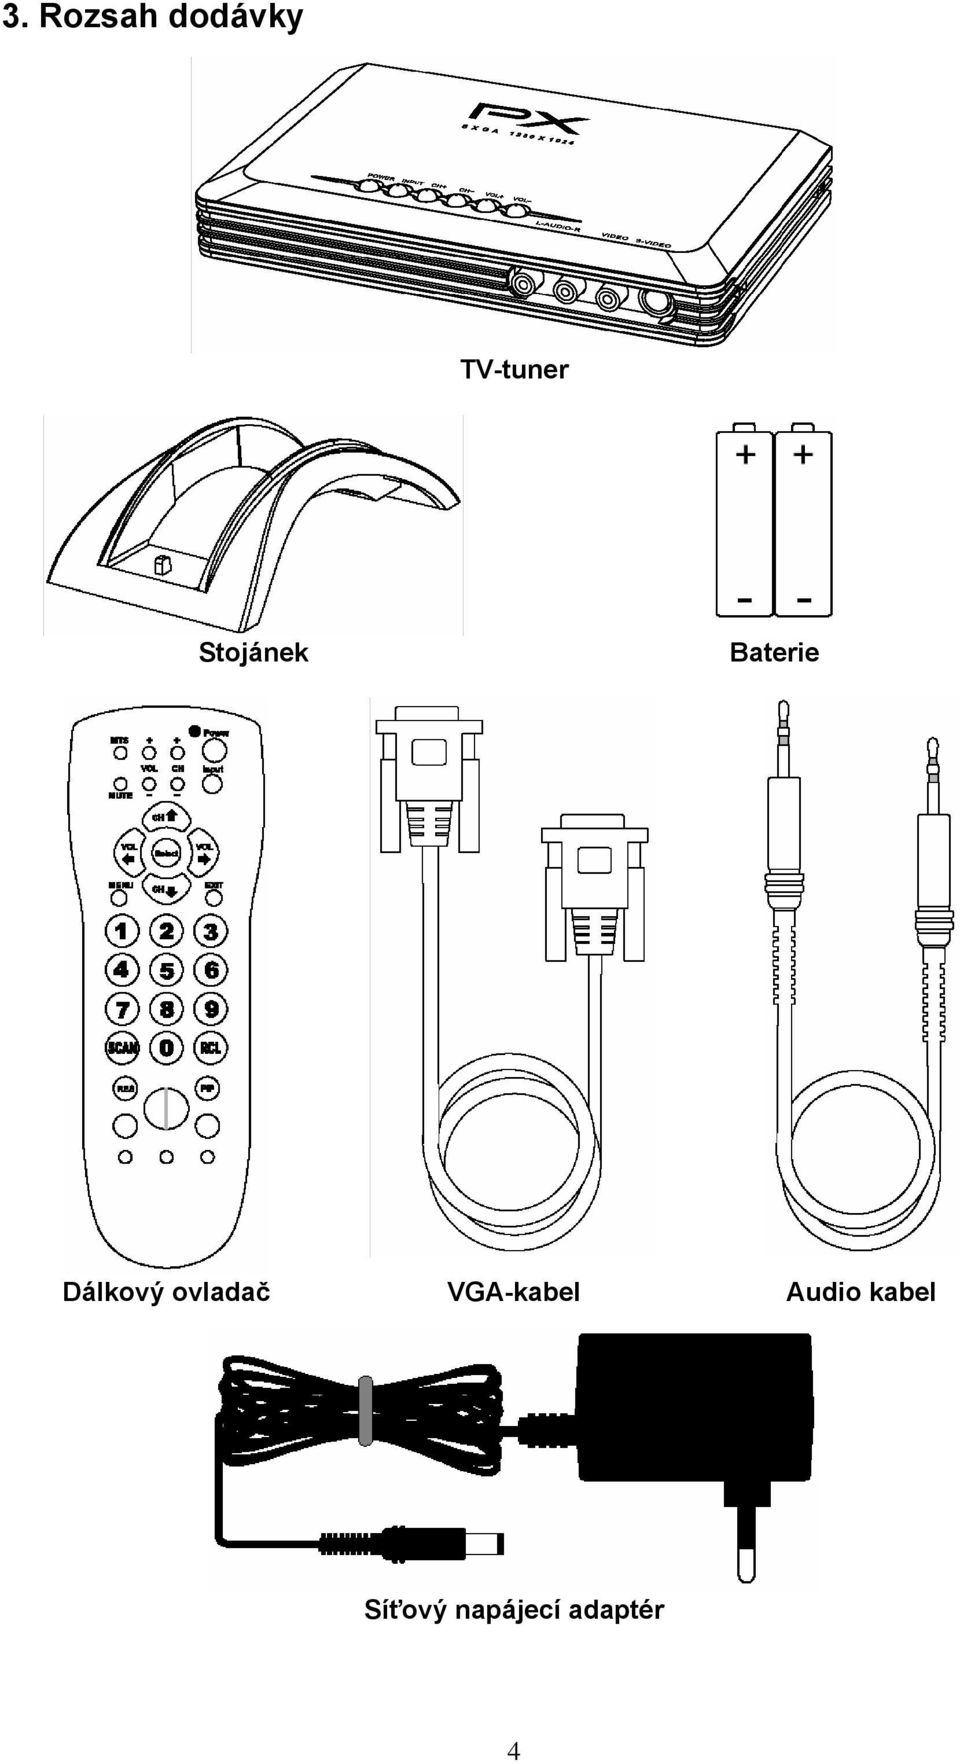 ovladač VGA-kabel Audio